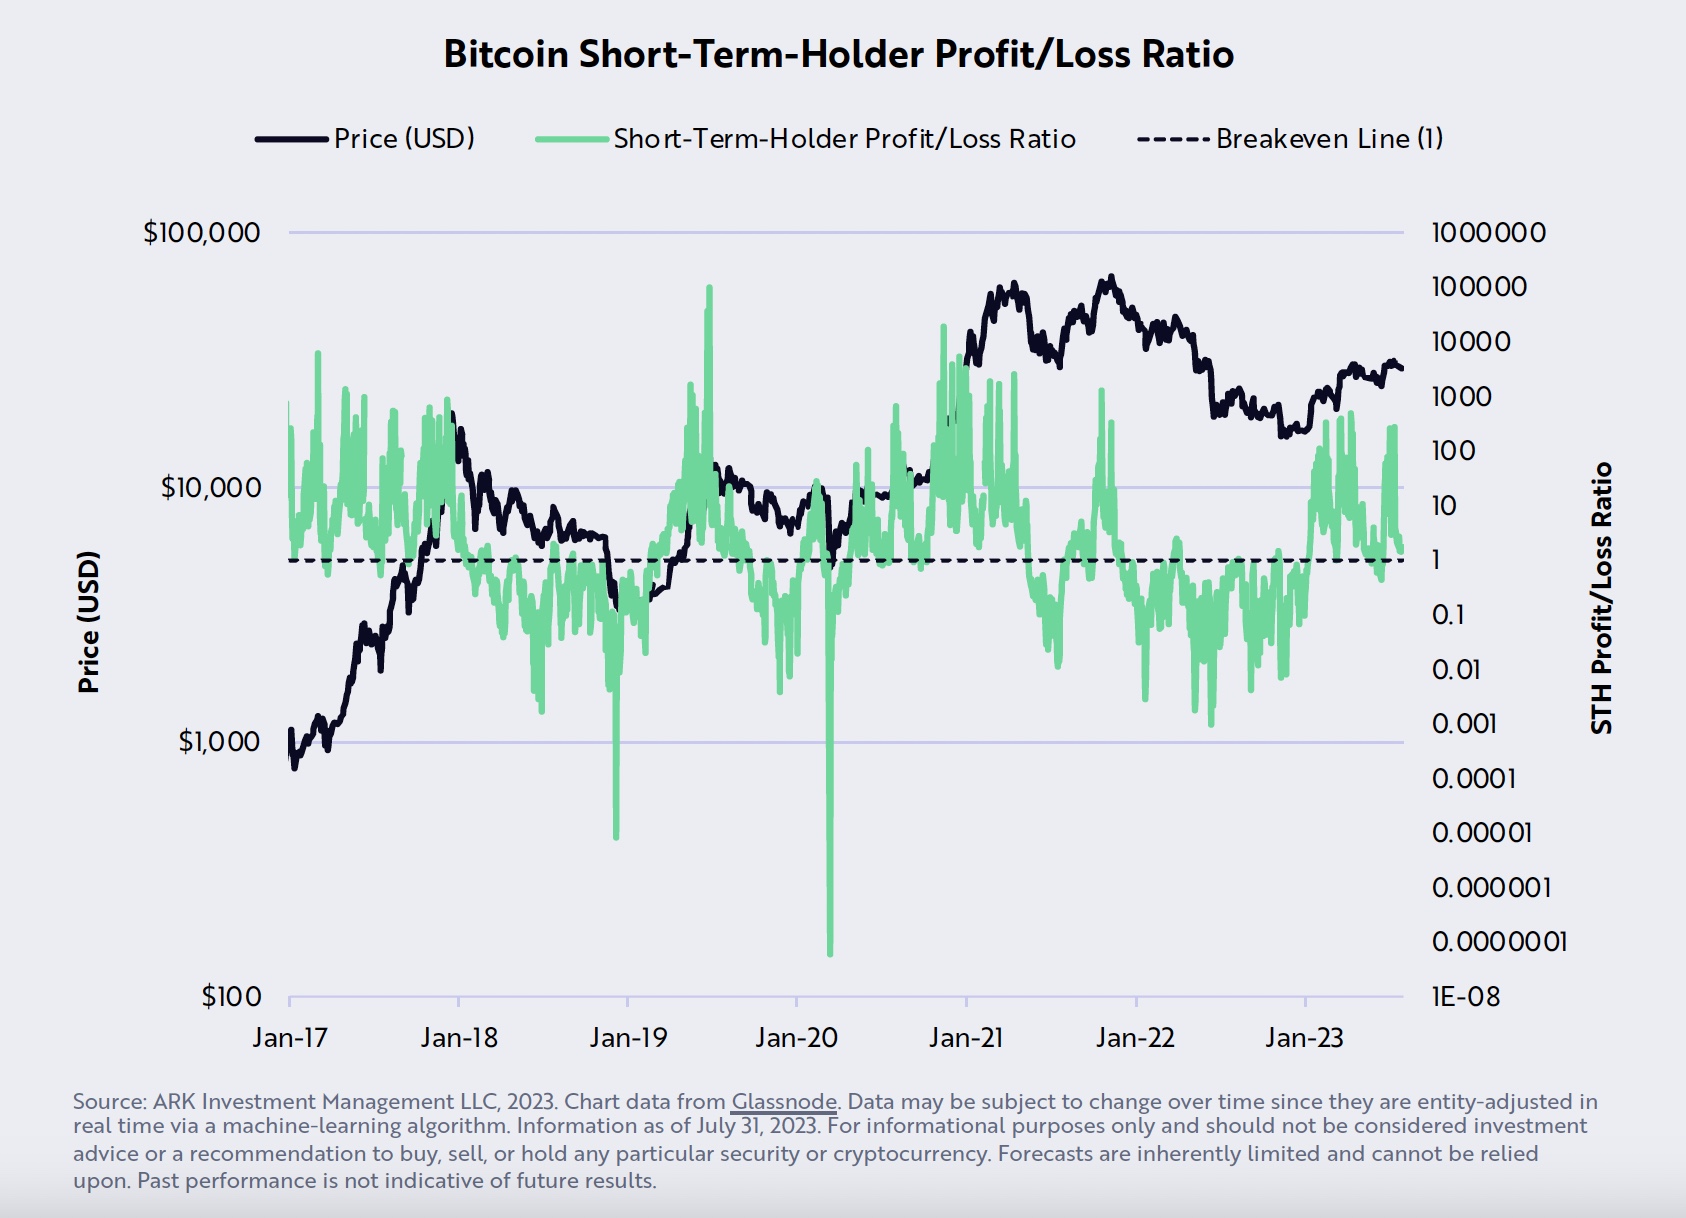 Bitcoin STH profit/loss ratio